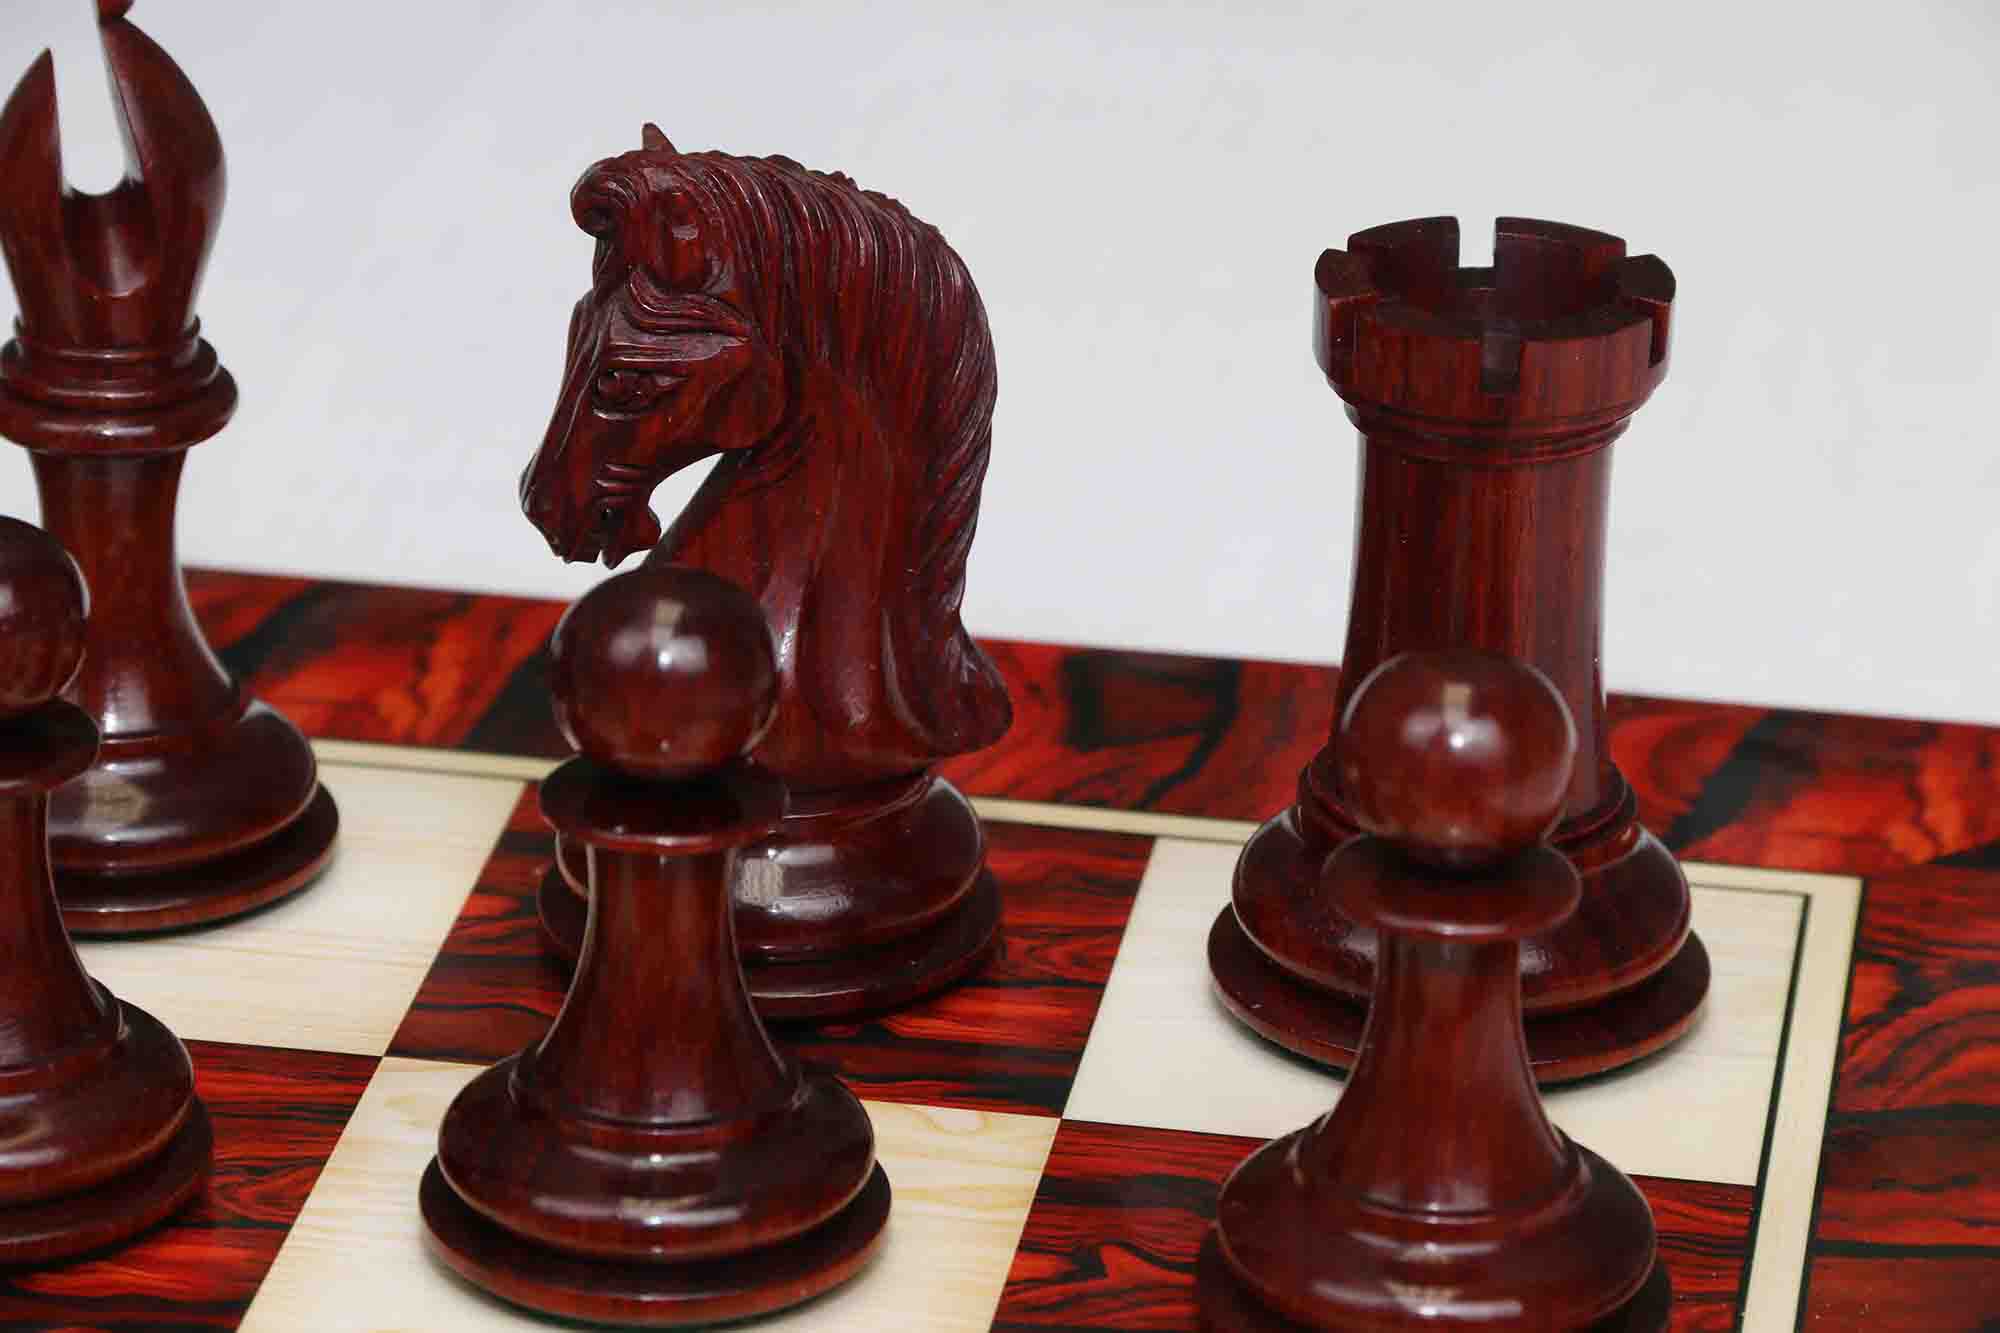 The Utgard Castle luxury Staunton luxury wood chess pieces -  Portugal